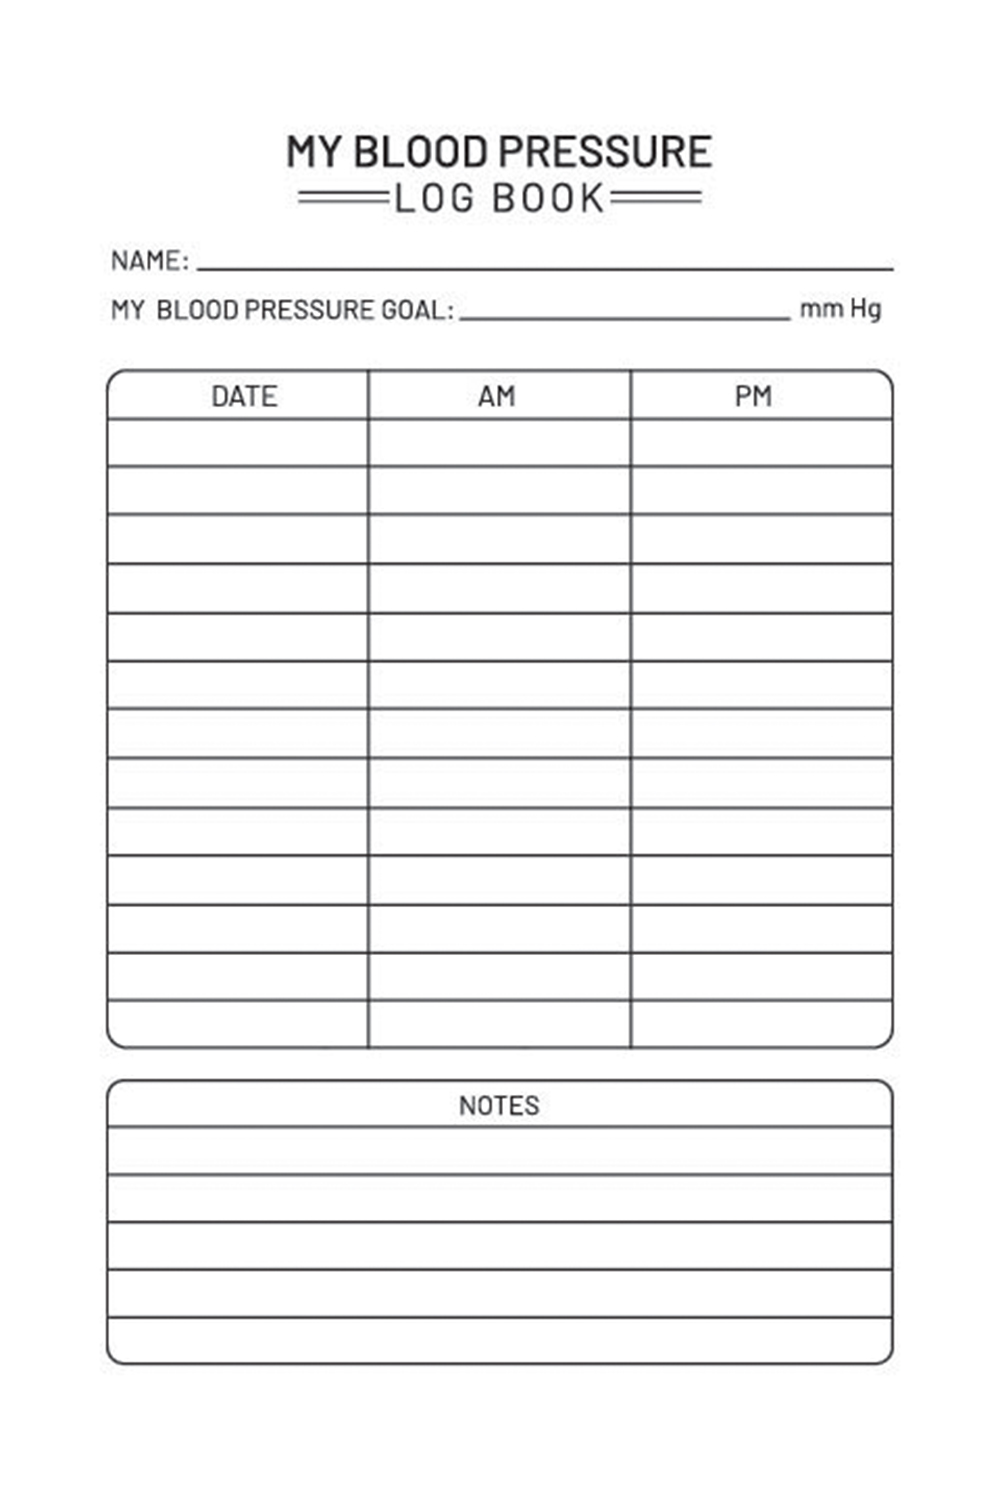 Blood Pressure Log Book - KDP Interior pinterest preview image.